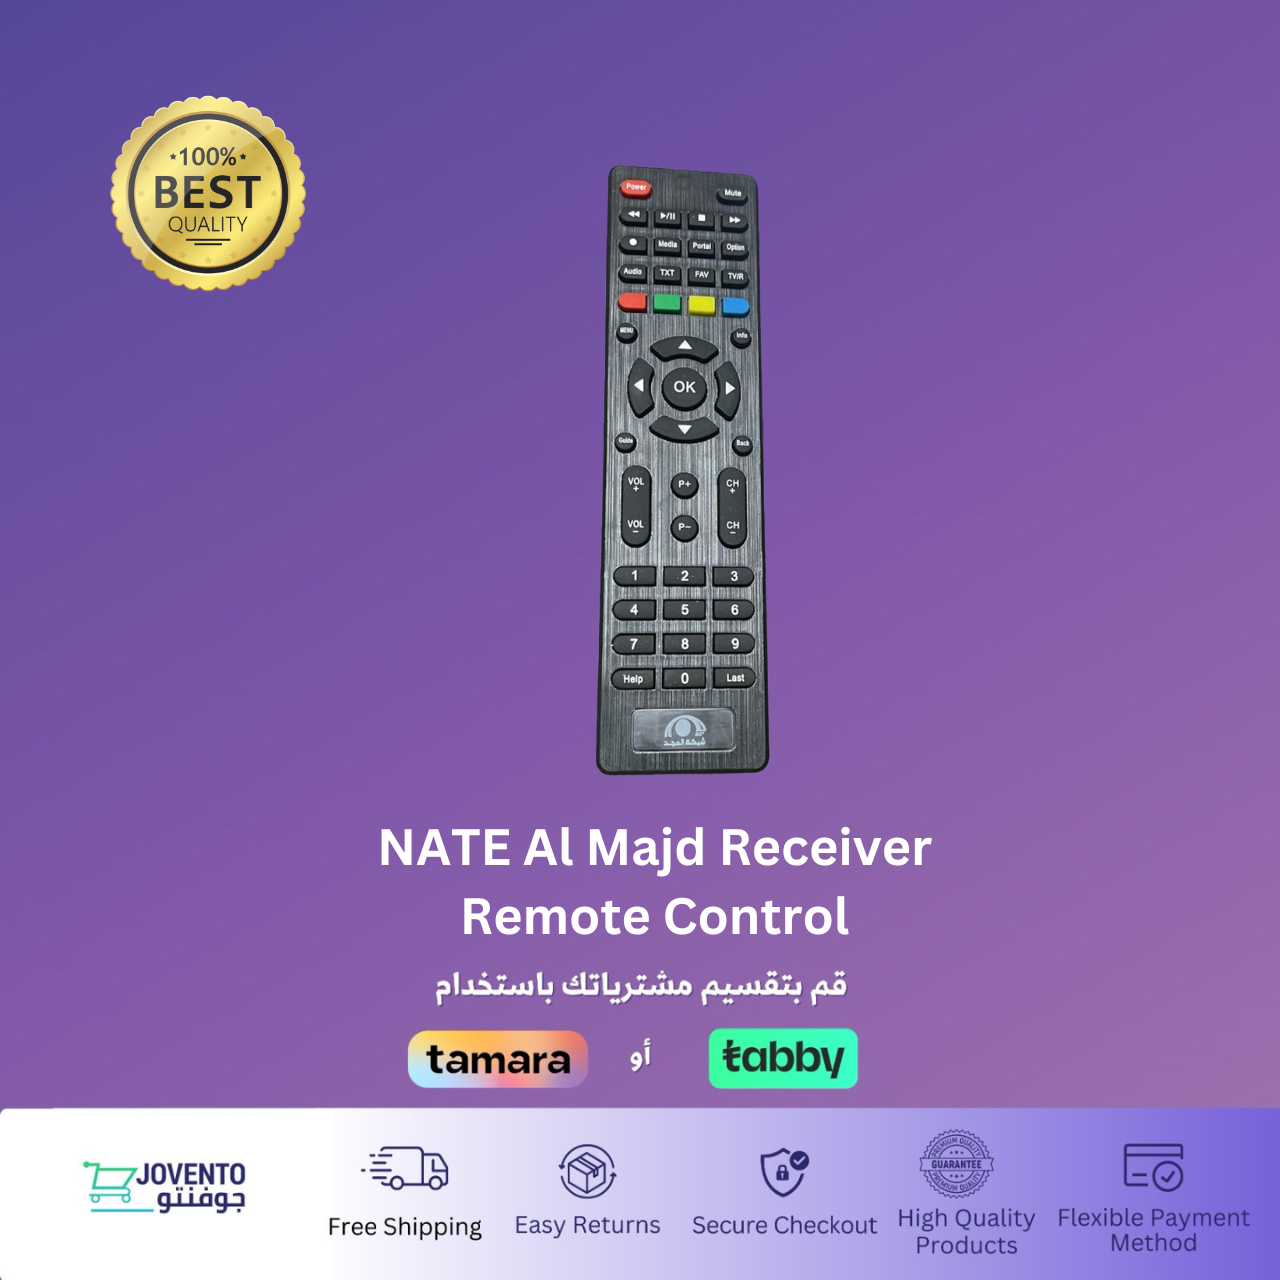 NATE Al Majd Receiver Remote Control